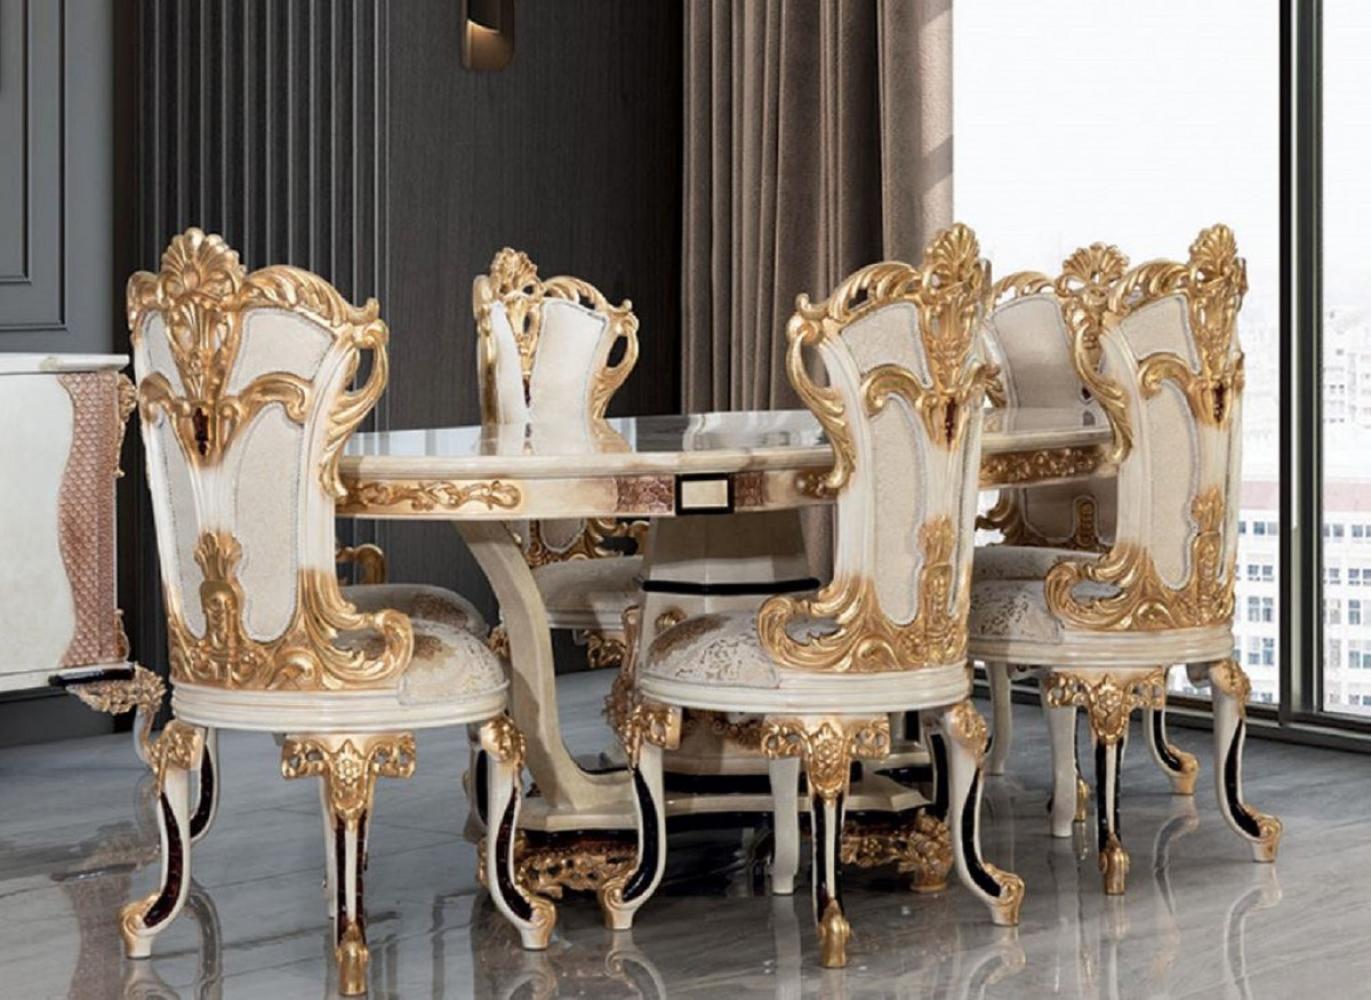 Casa Padrino Luxus Barock Esszimmer Set Creme / Weiß / Gold - 1 Barock Esstisch & 6 Barock Esszimmerstühle - Barock Esszimmer Möbel - Luxus Möbel im Barockstil - Edel & Prunkvoll Bild 1